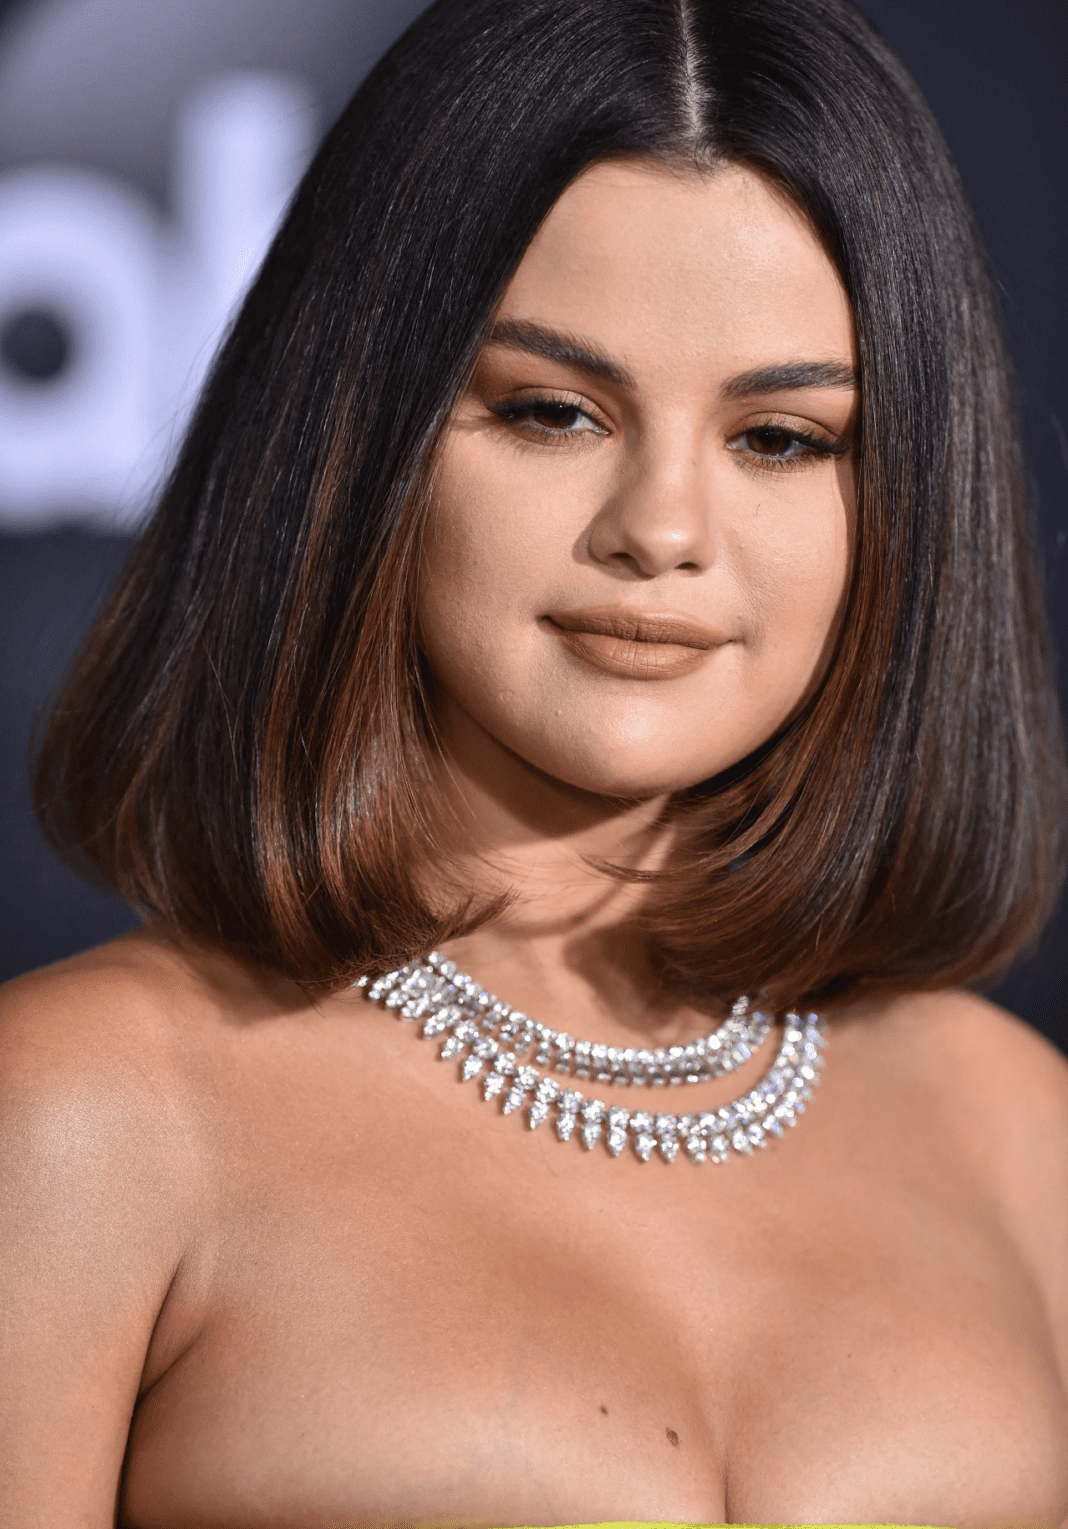 Selena Gomez: Δείτε το νυφικό μακιγιάζ που επέλεξε και έκανε θραύση στο Instagram!